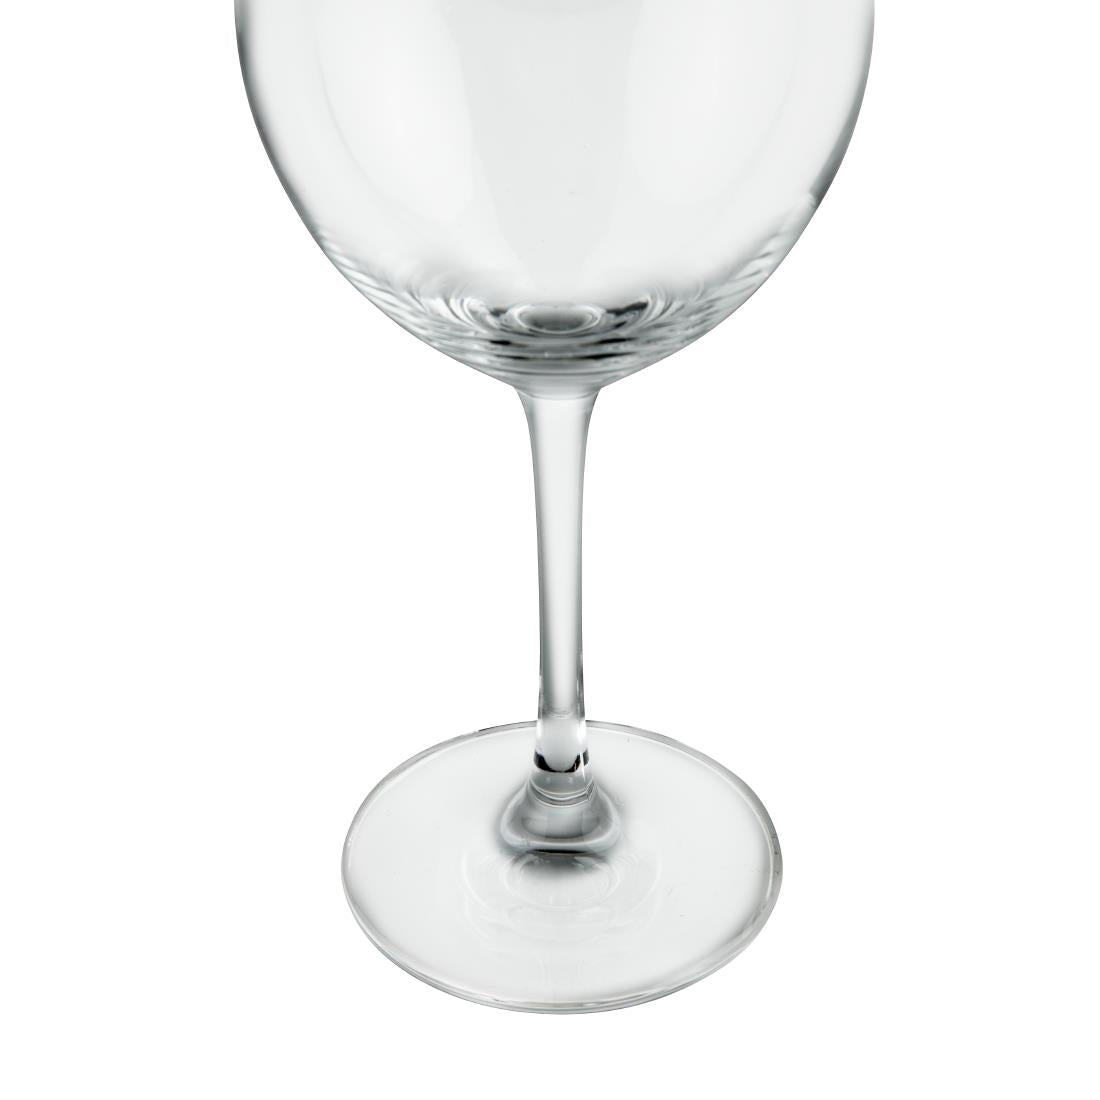 Schott Zwiesel Ivento Red Wine glass 480ml (Pack of 6)